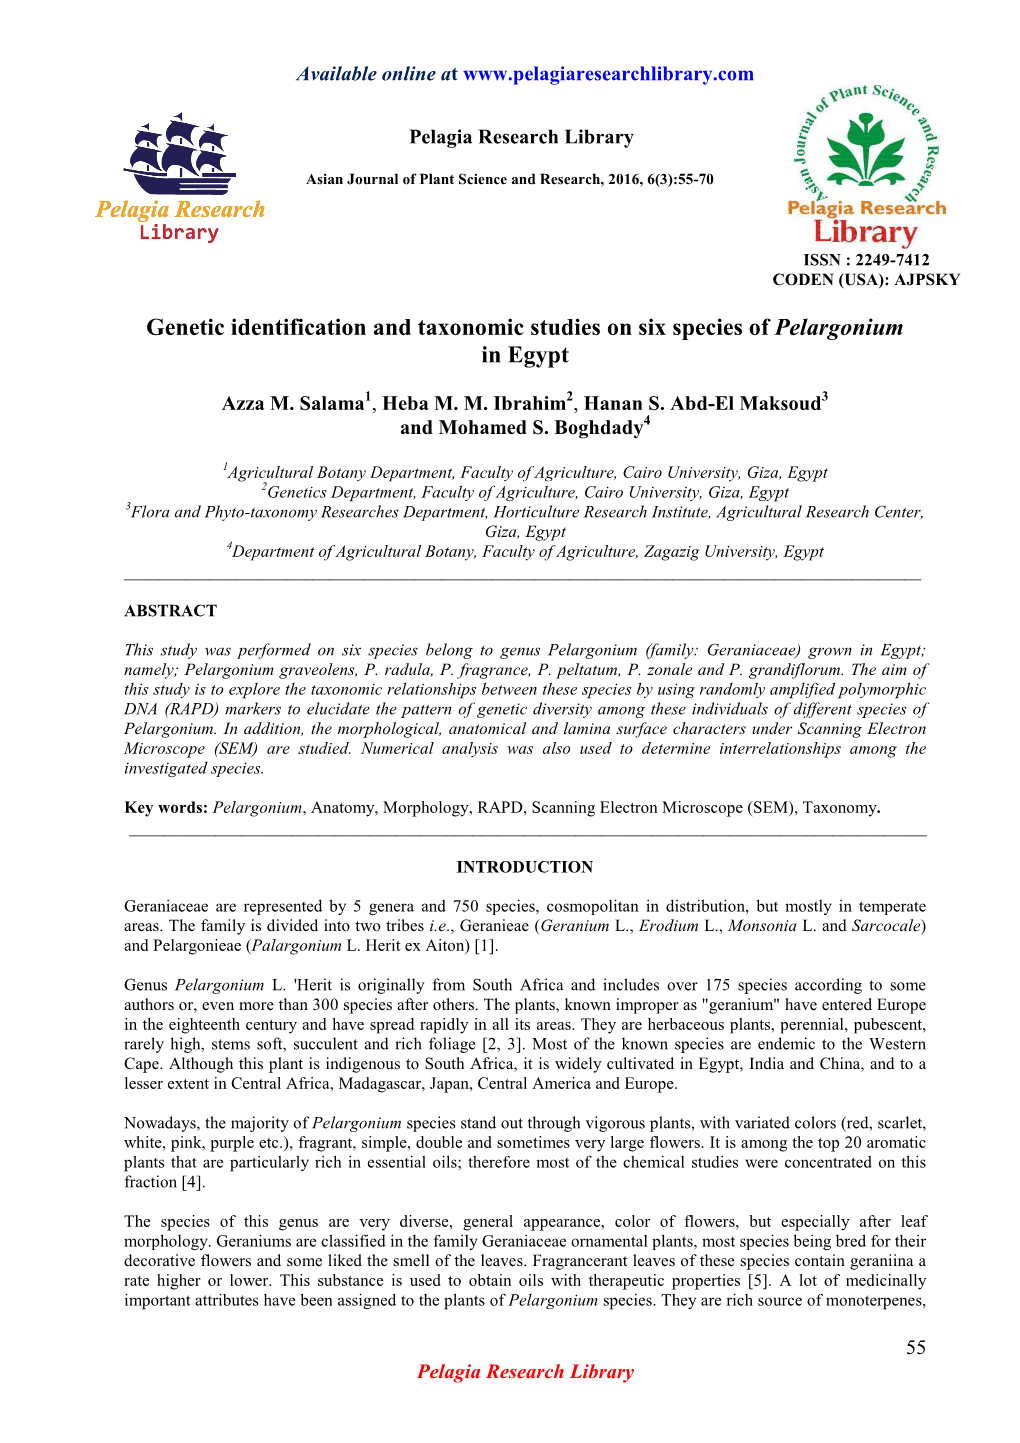 Genetic Identification and Taxonomic Studies on Six Species of Pelargonium in Egypt